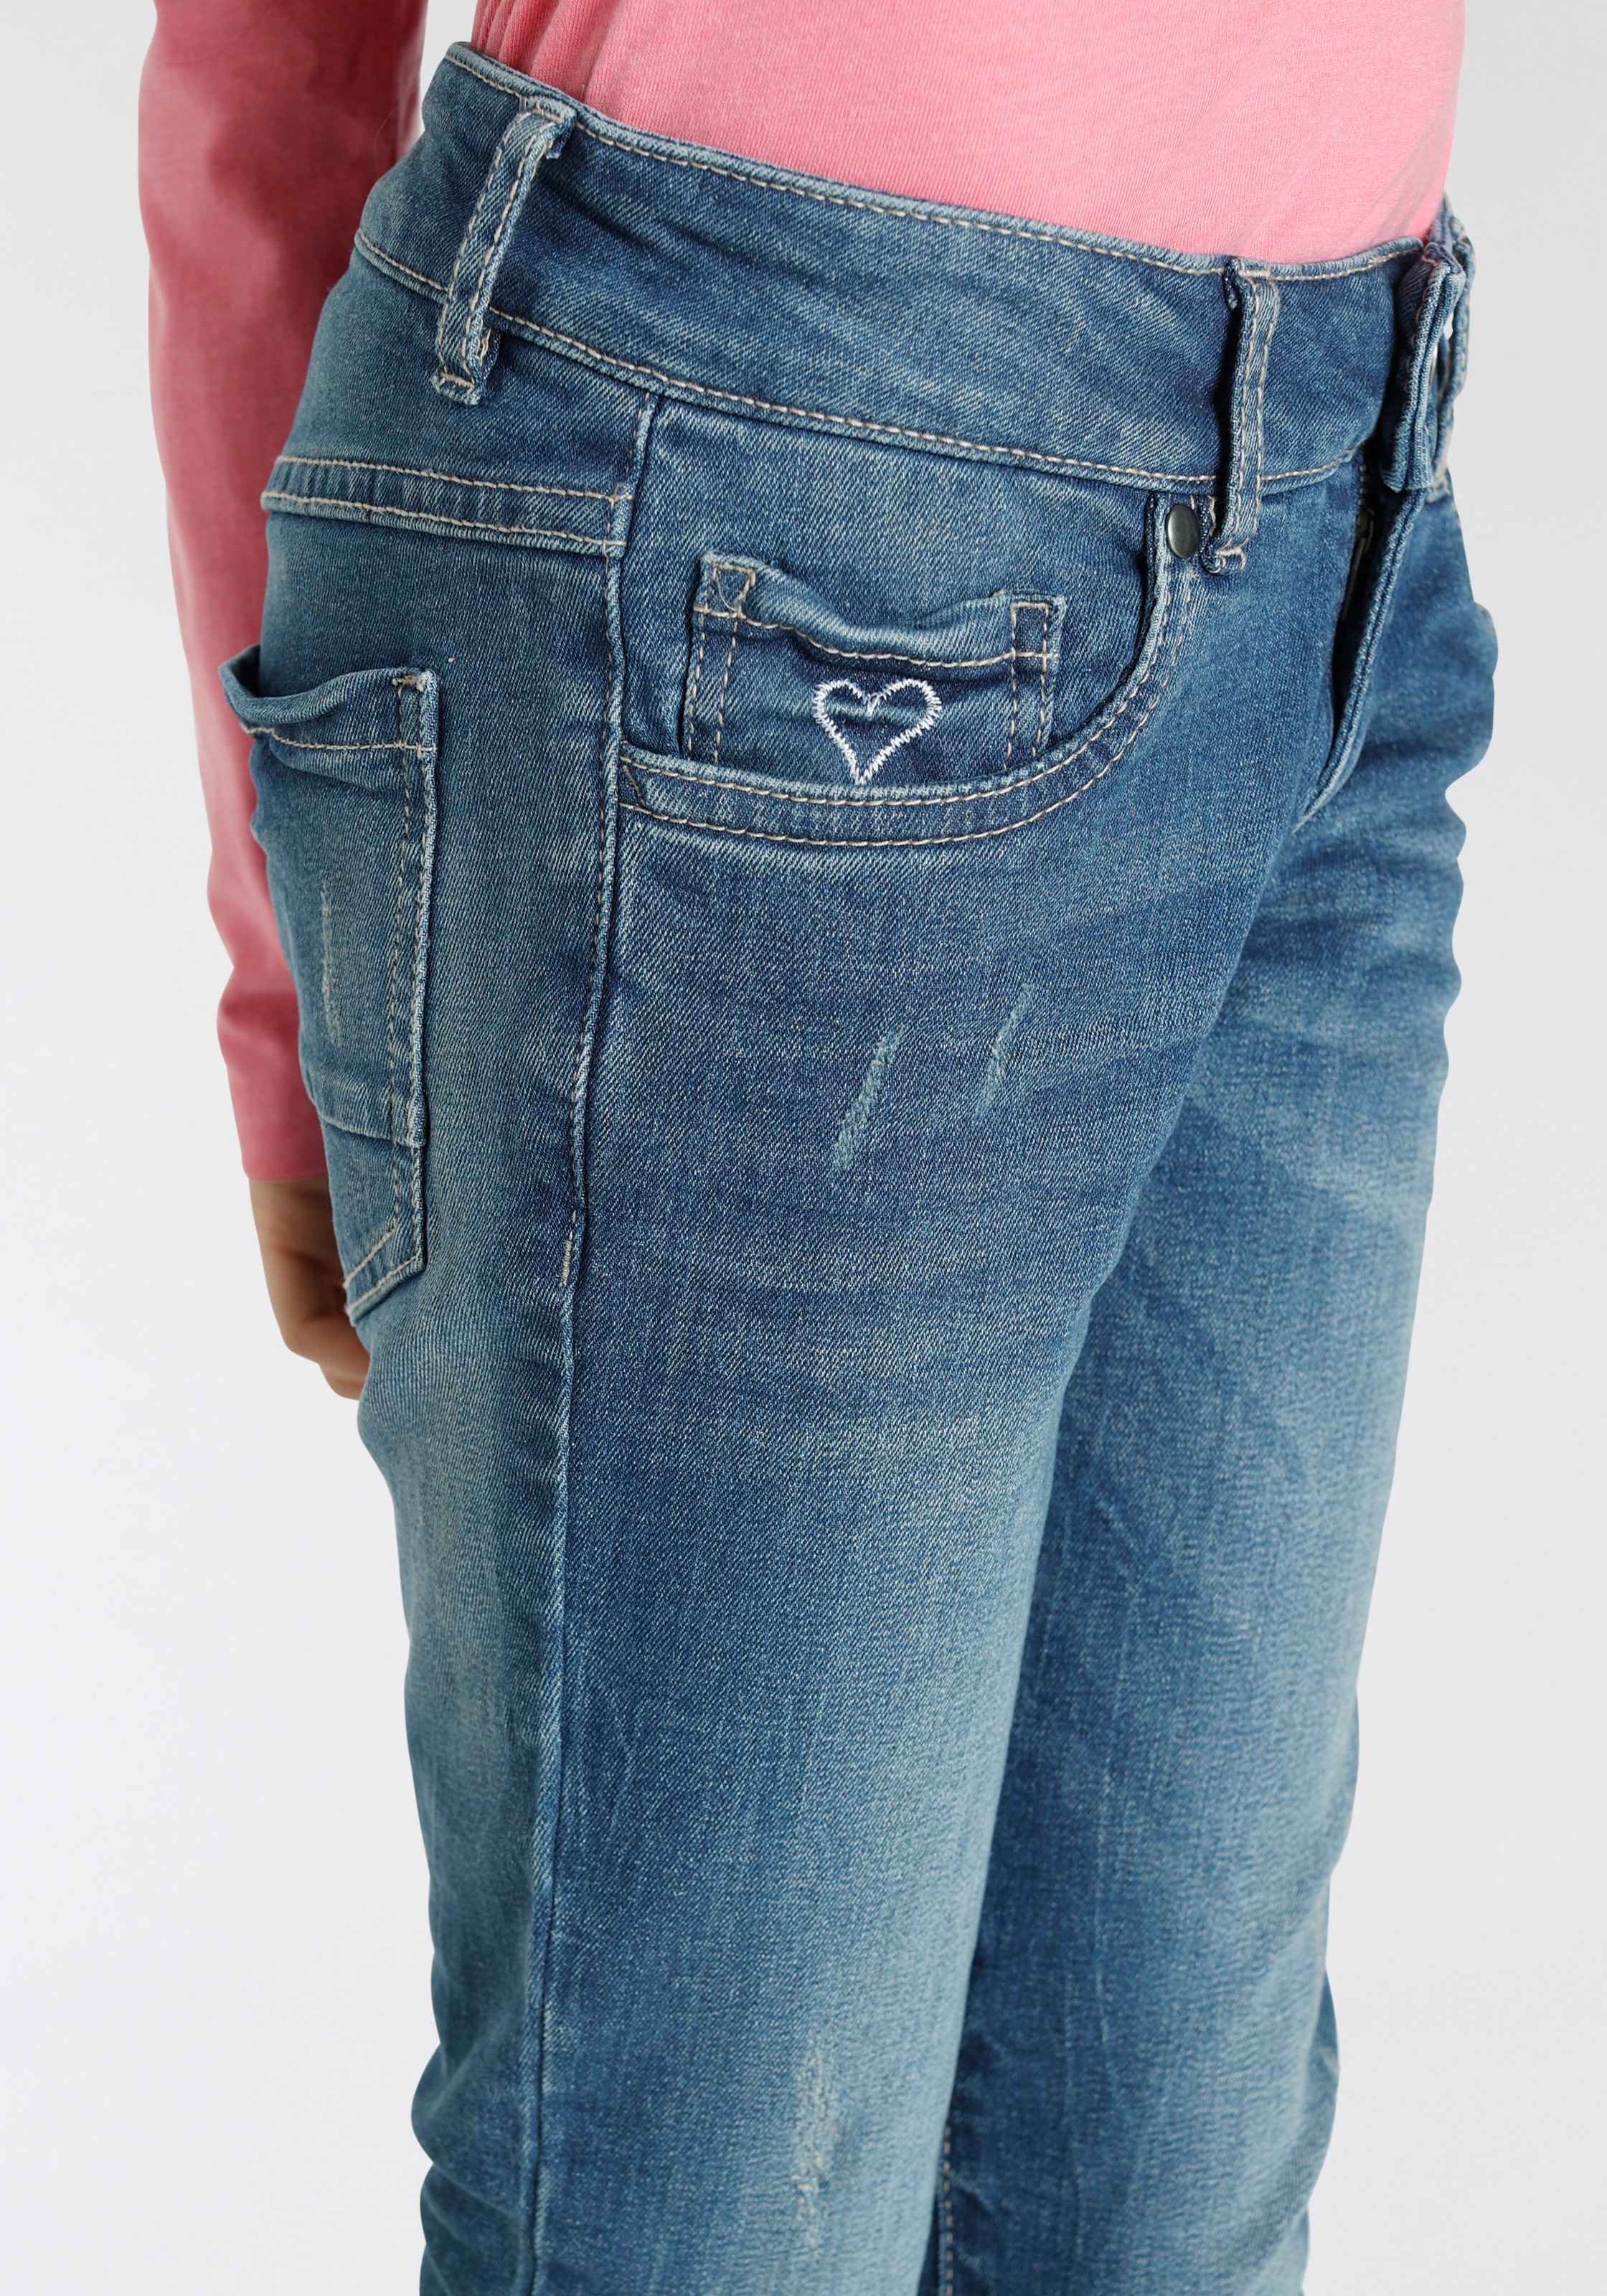 & NEUE & Kickin Kids. Skinny«, Kickin kaufen »Super online für Skinny-fit-Jeans Alife Alife MARKE!